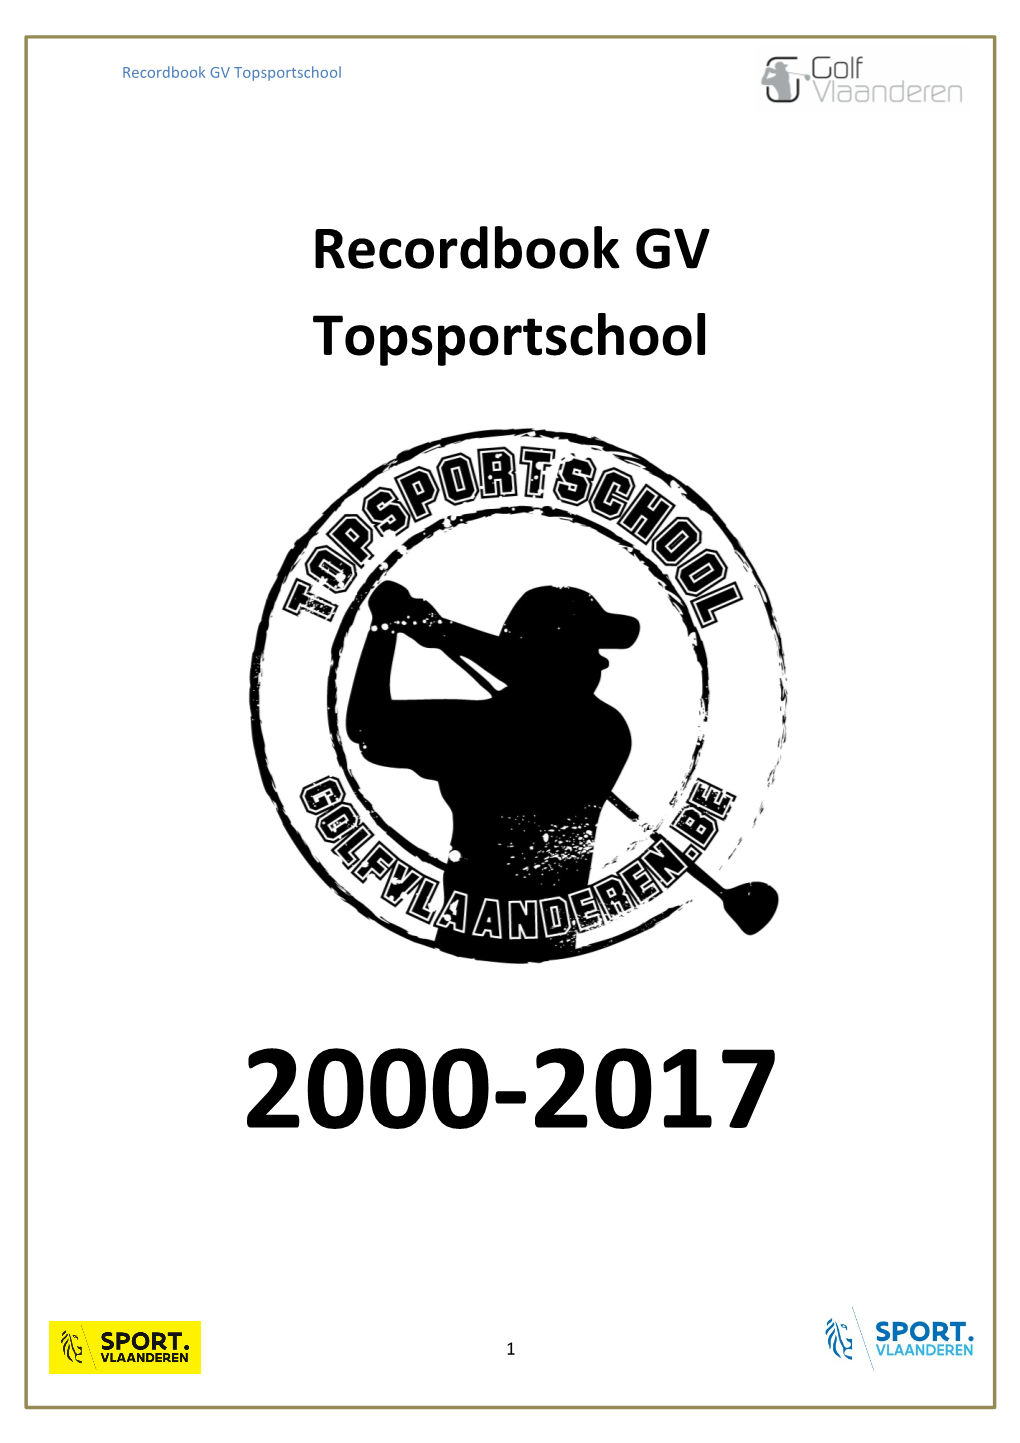 Recordbook GV Topsportschool